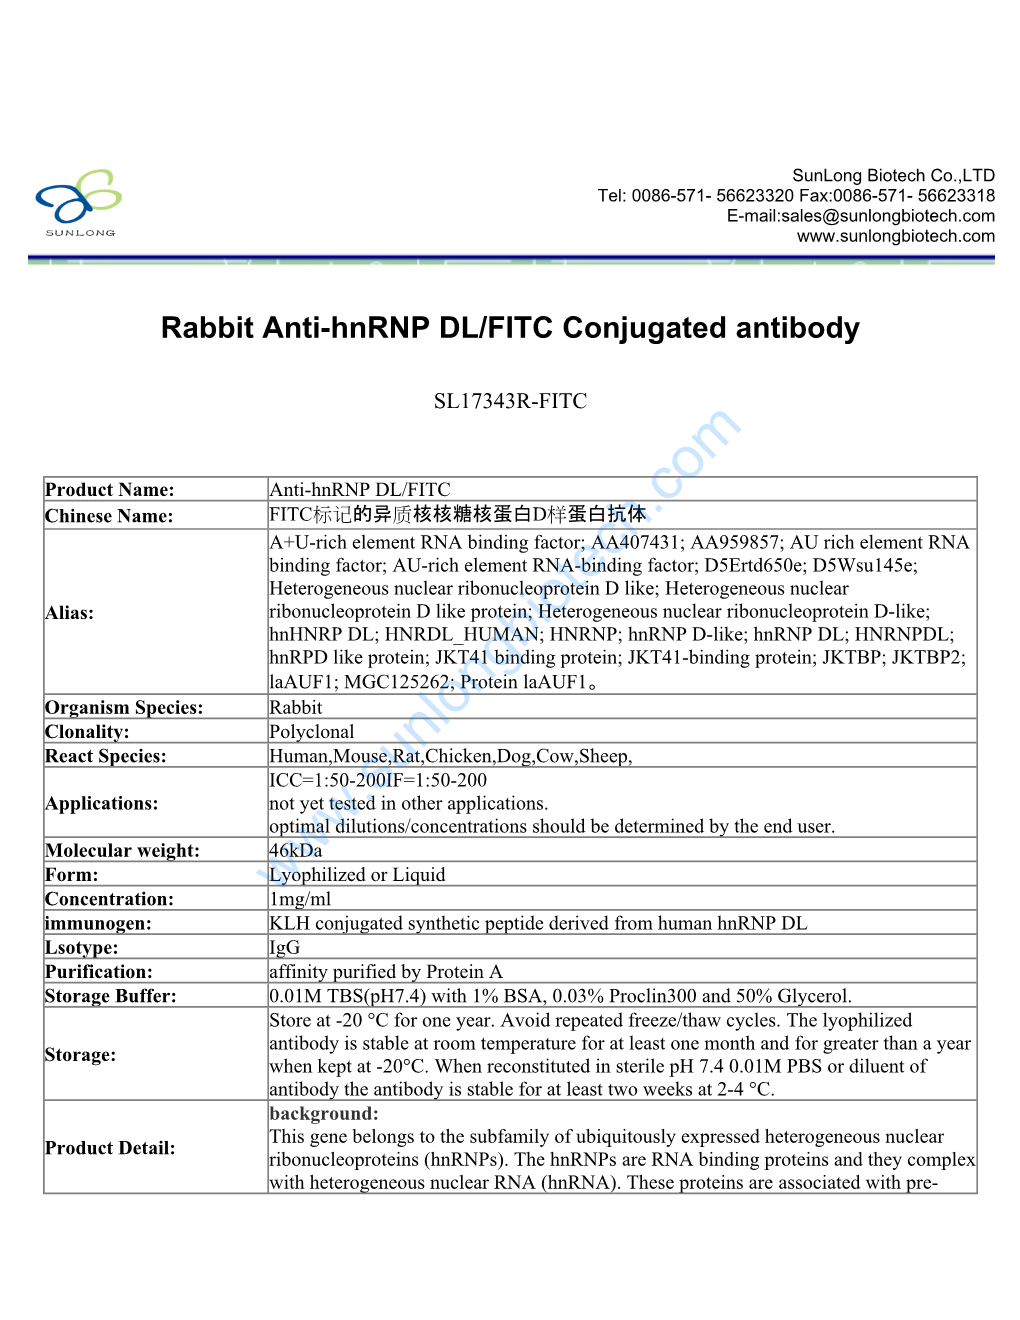 Rabbit Anti-Hnrnp DL/FITC Conjugated Antibody-SL17343R-FITC